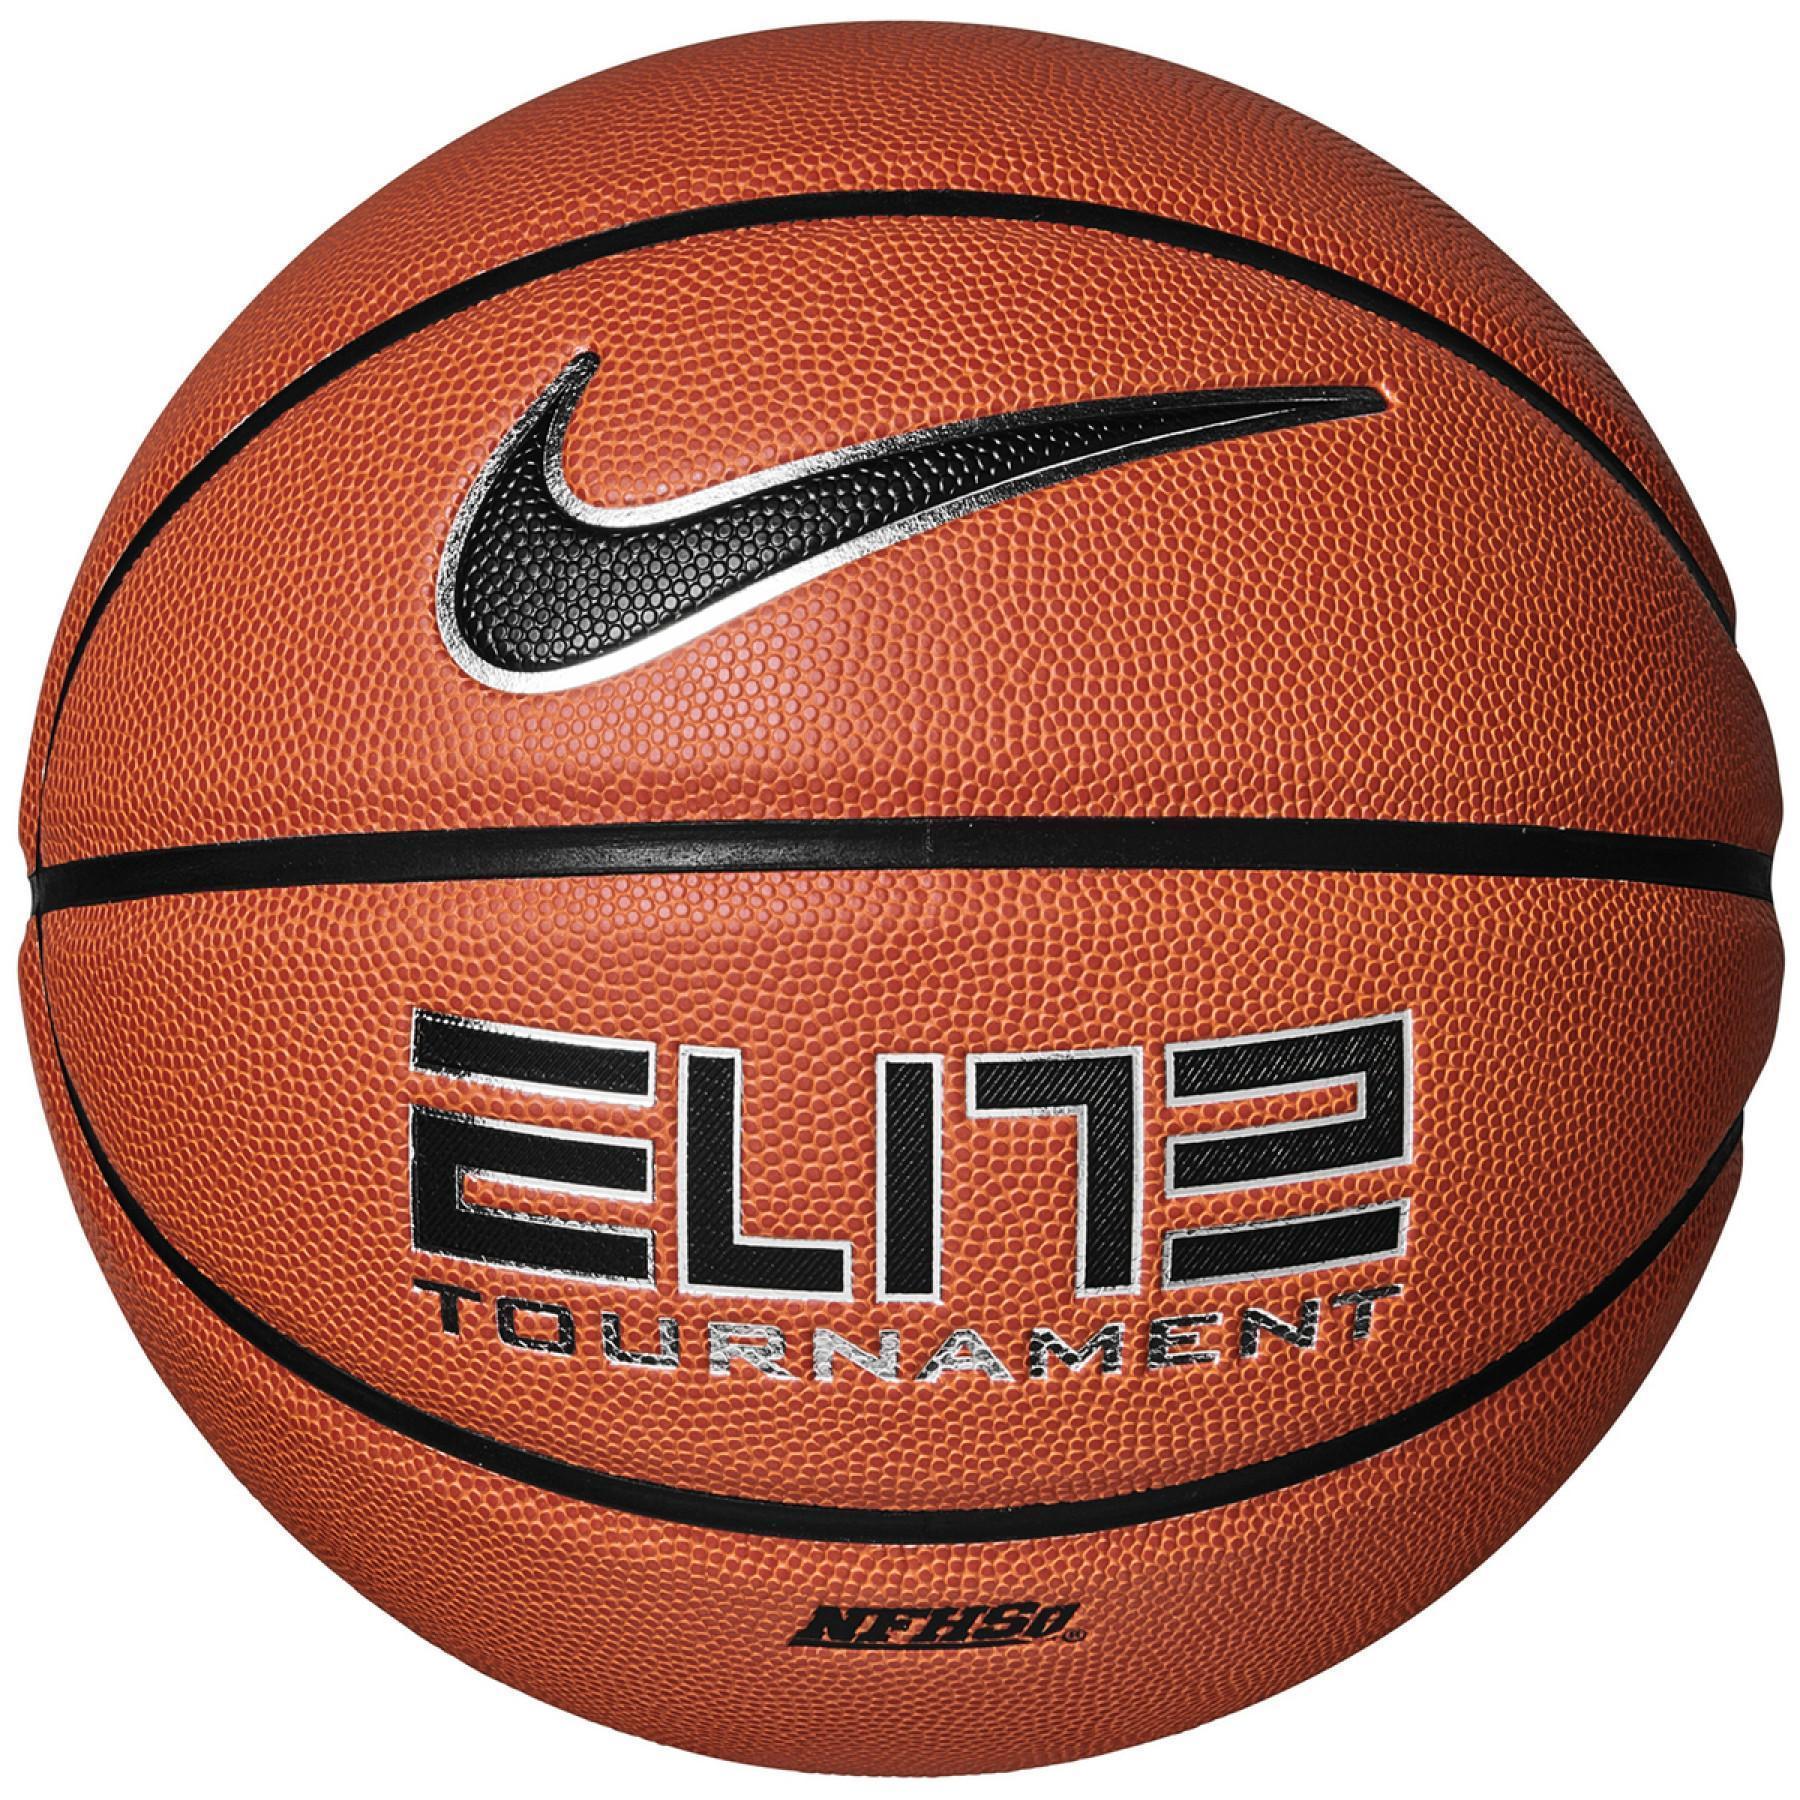 Ballong Nike elite tournament